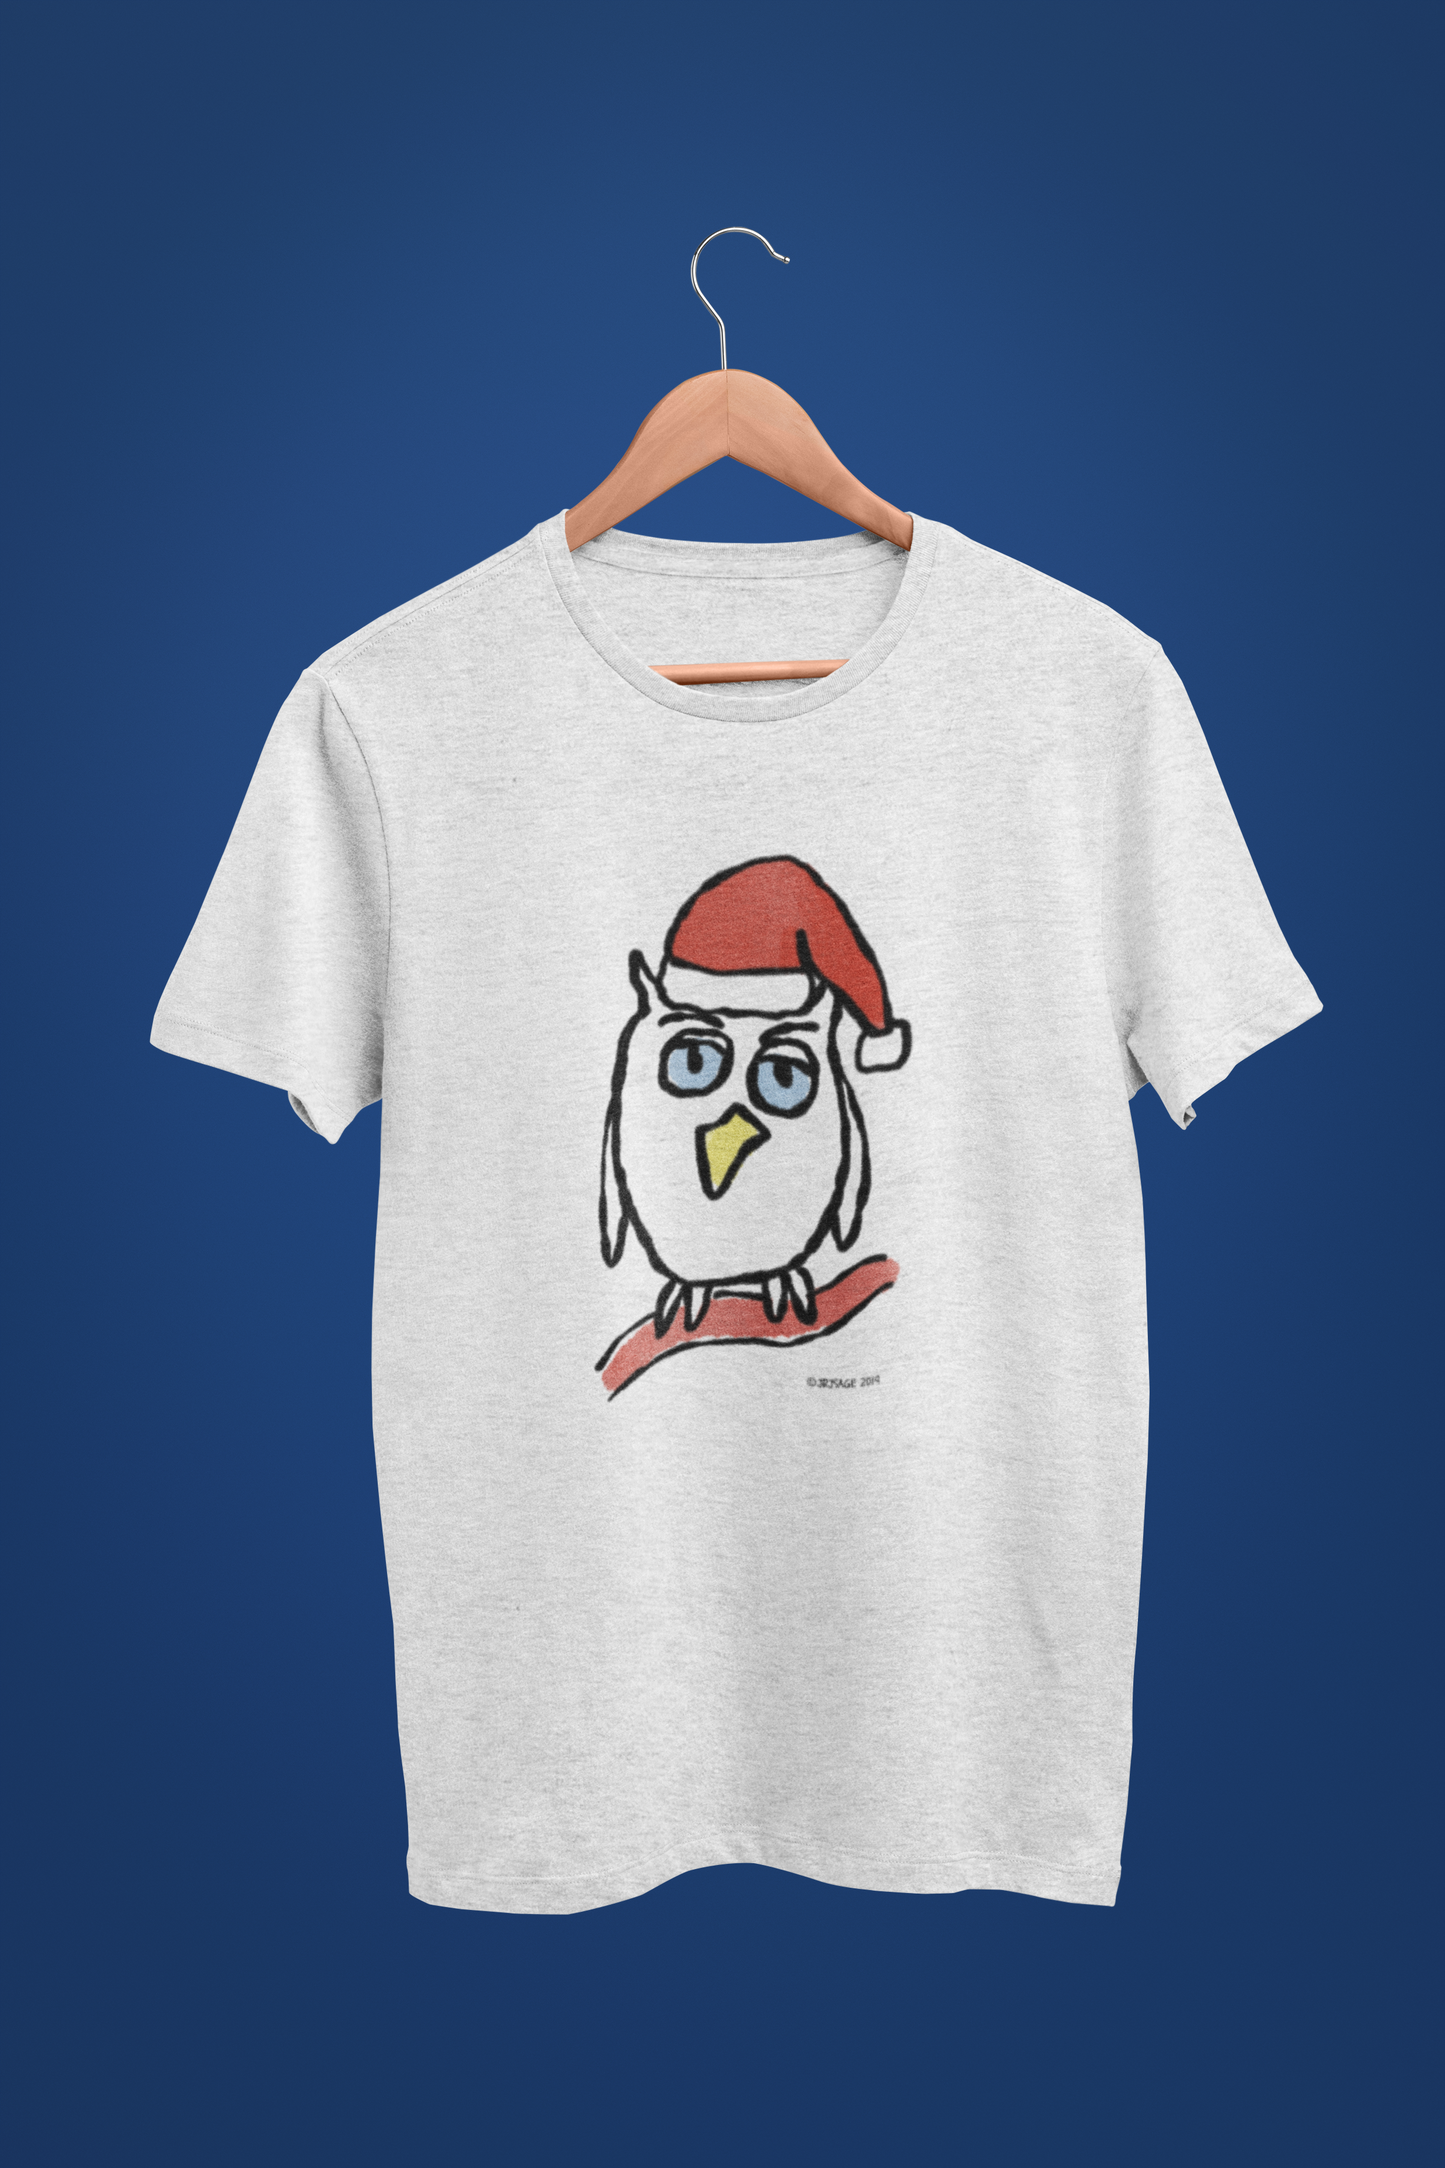 Santa Night Owl cute Christmas T-shirt illustrated design by Hector and Bone on a Vegan cotton cream heather grey t-shirt